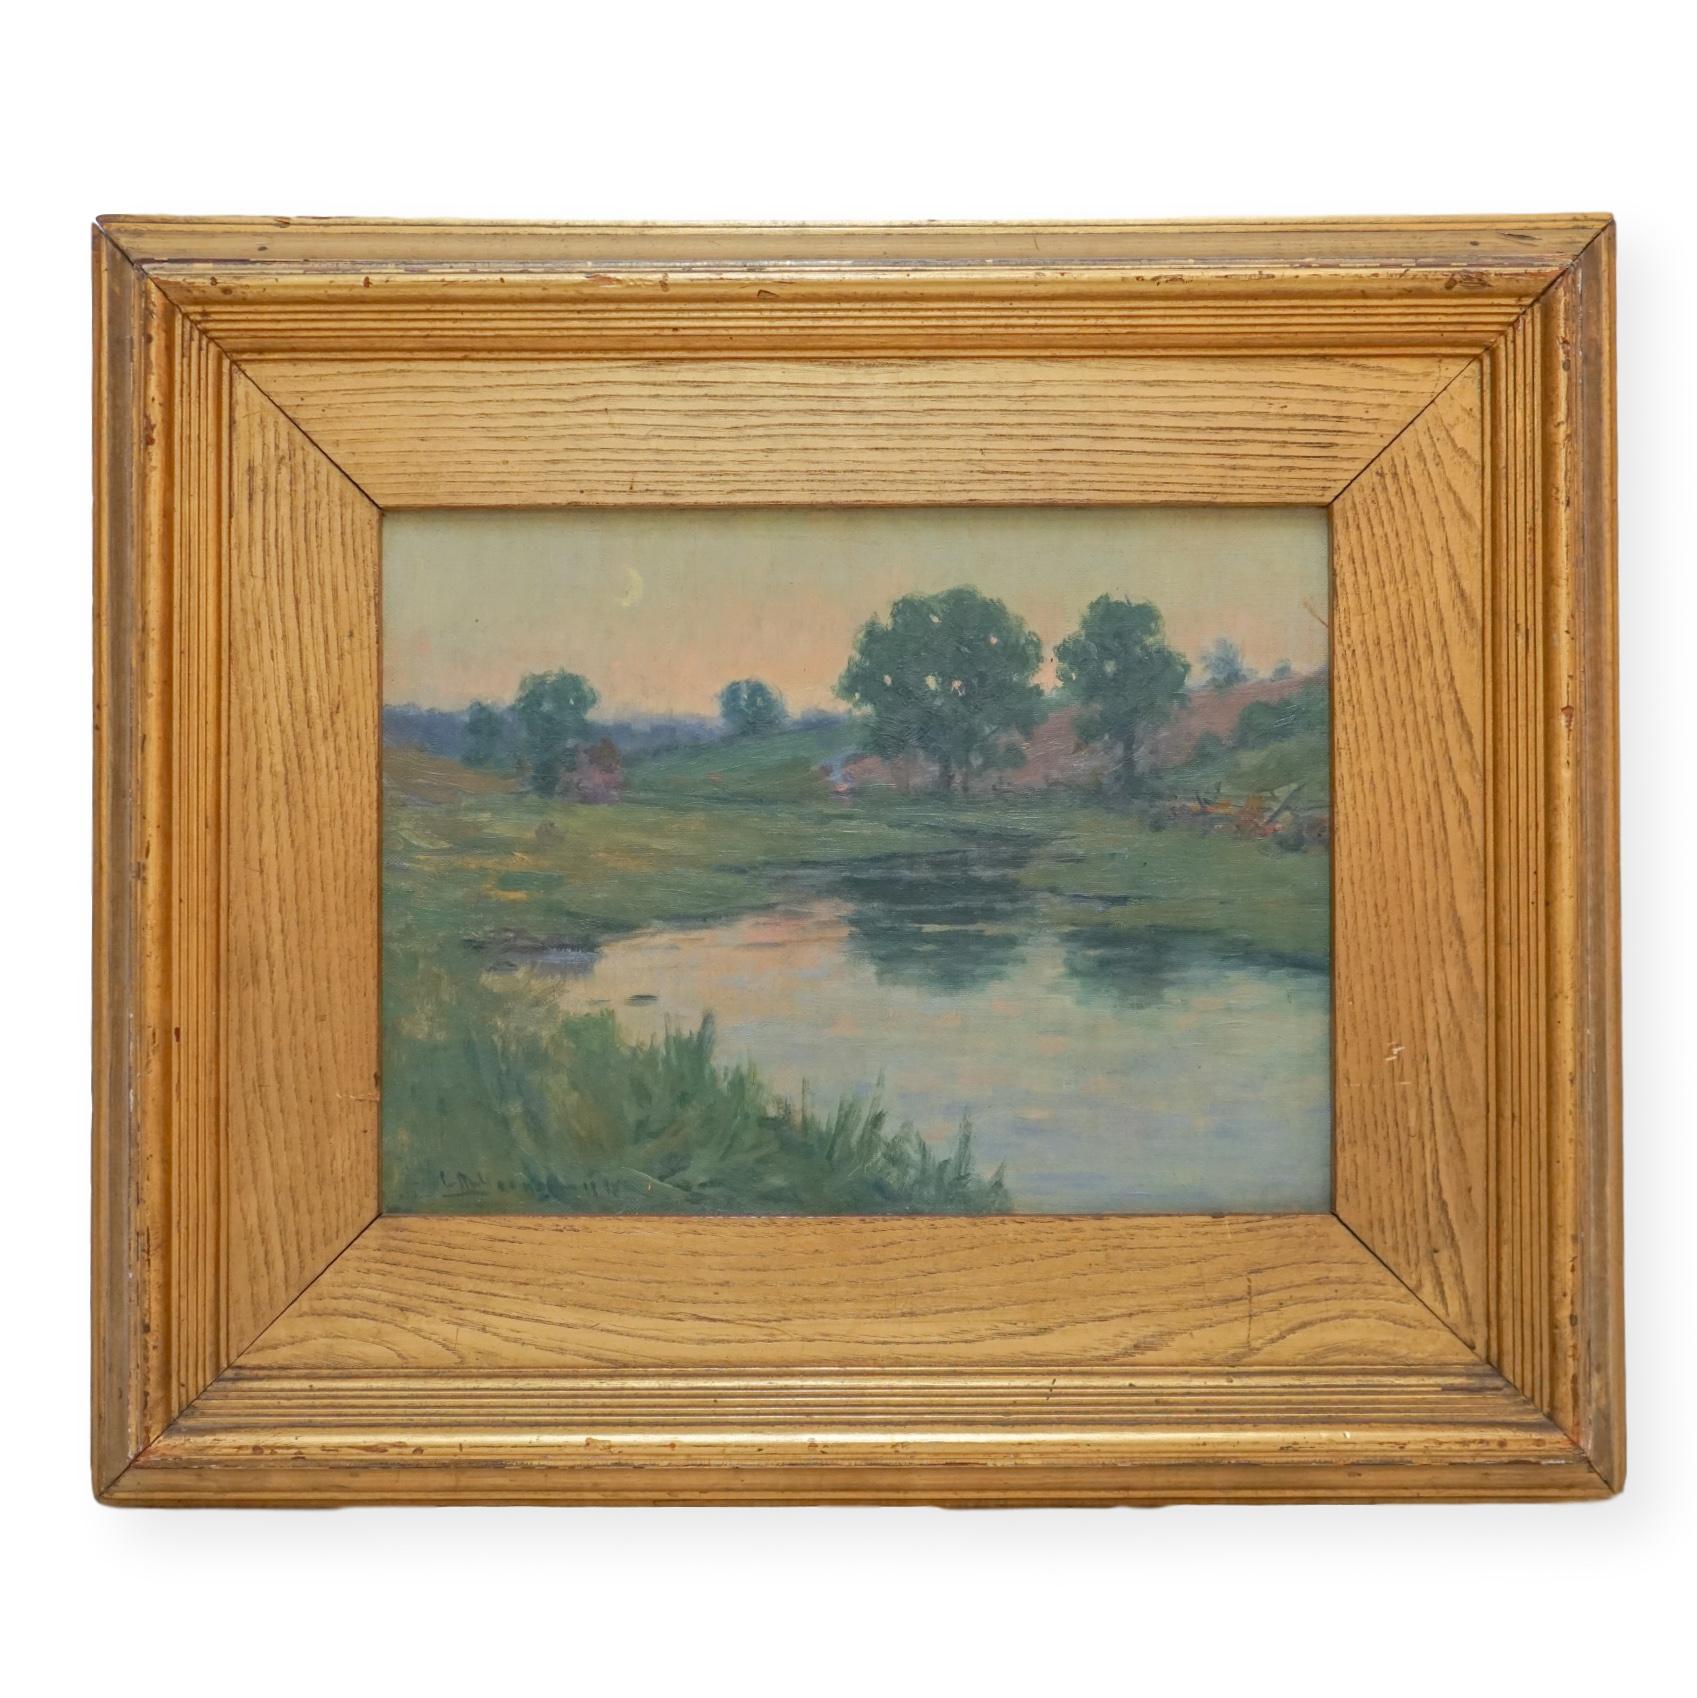 Charles Morris Young Landscape Painting - 1893 American Tonalist Impressionist Moonlit Landscape